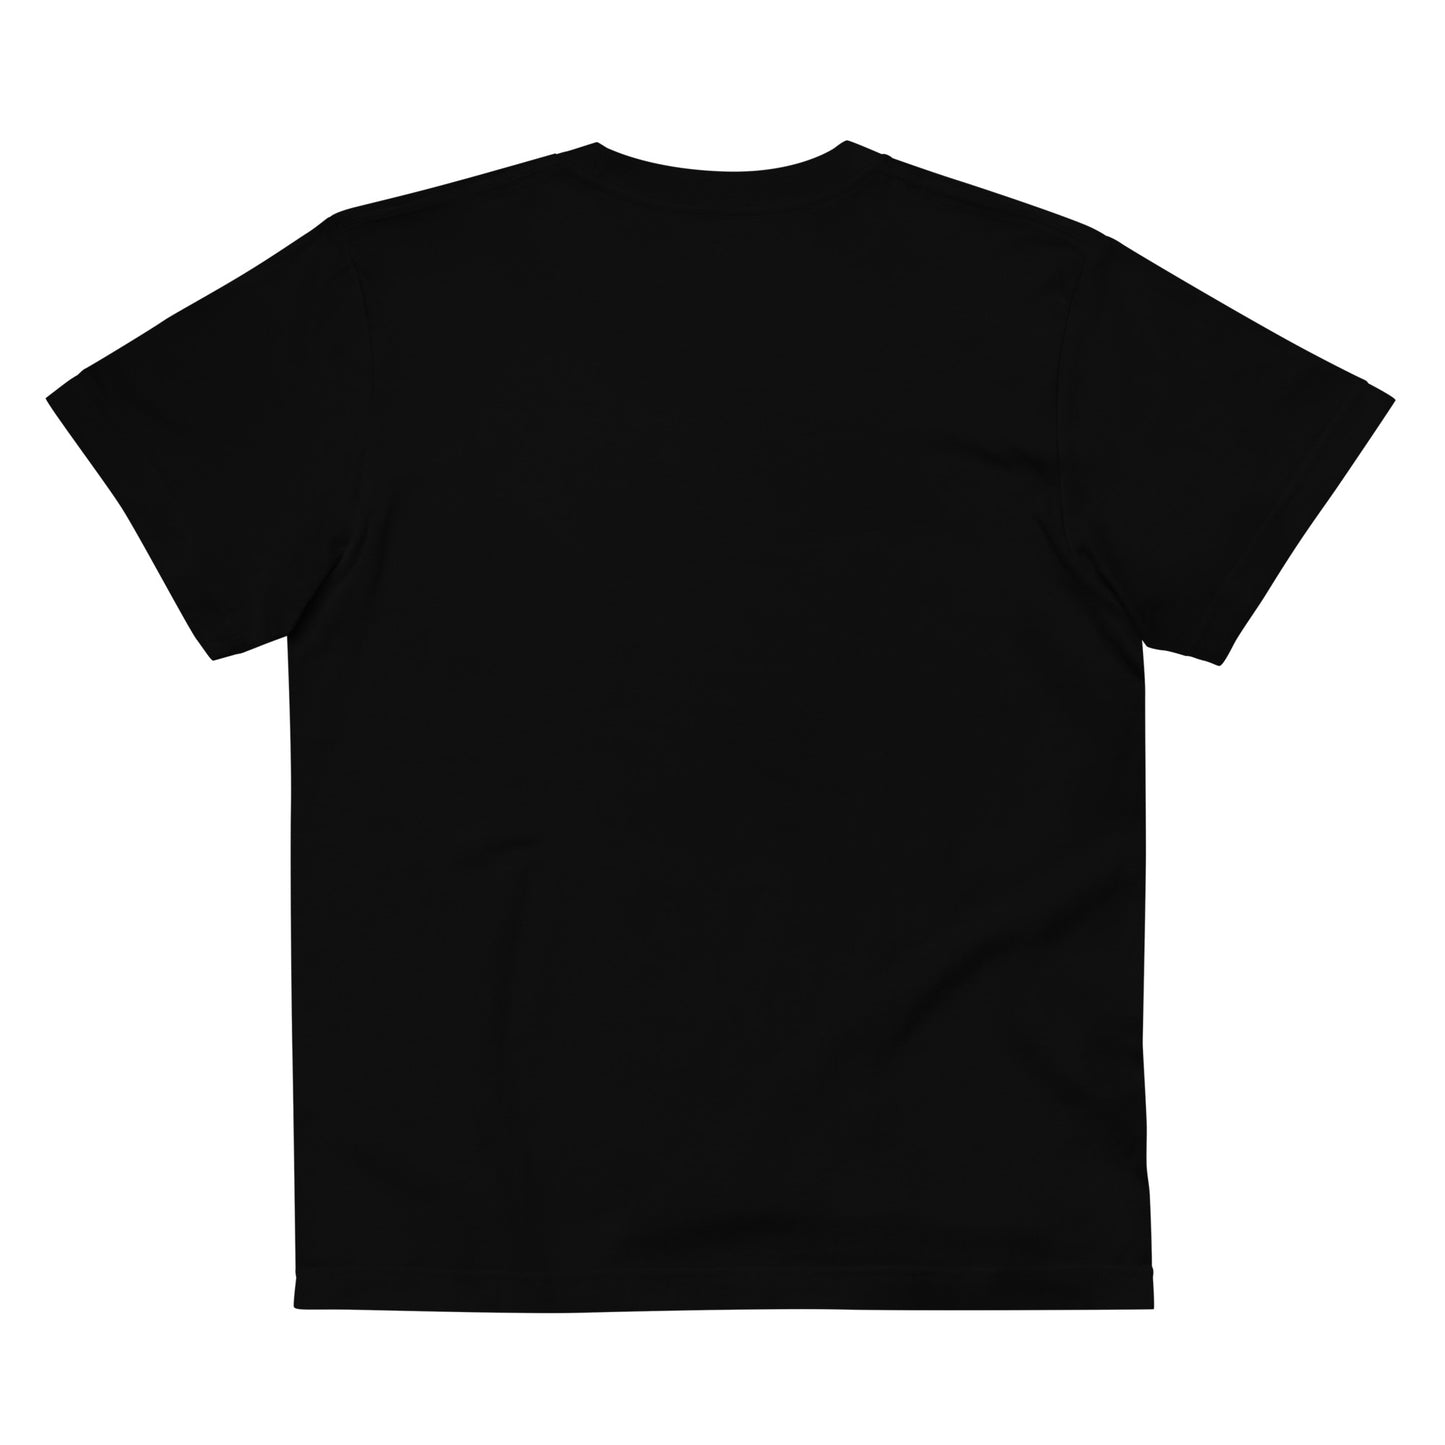 N004 - Katun Berkualitas Tinggi T-shirt (Skuter : Hitam)